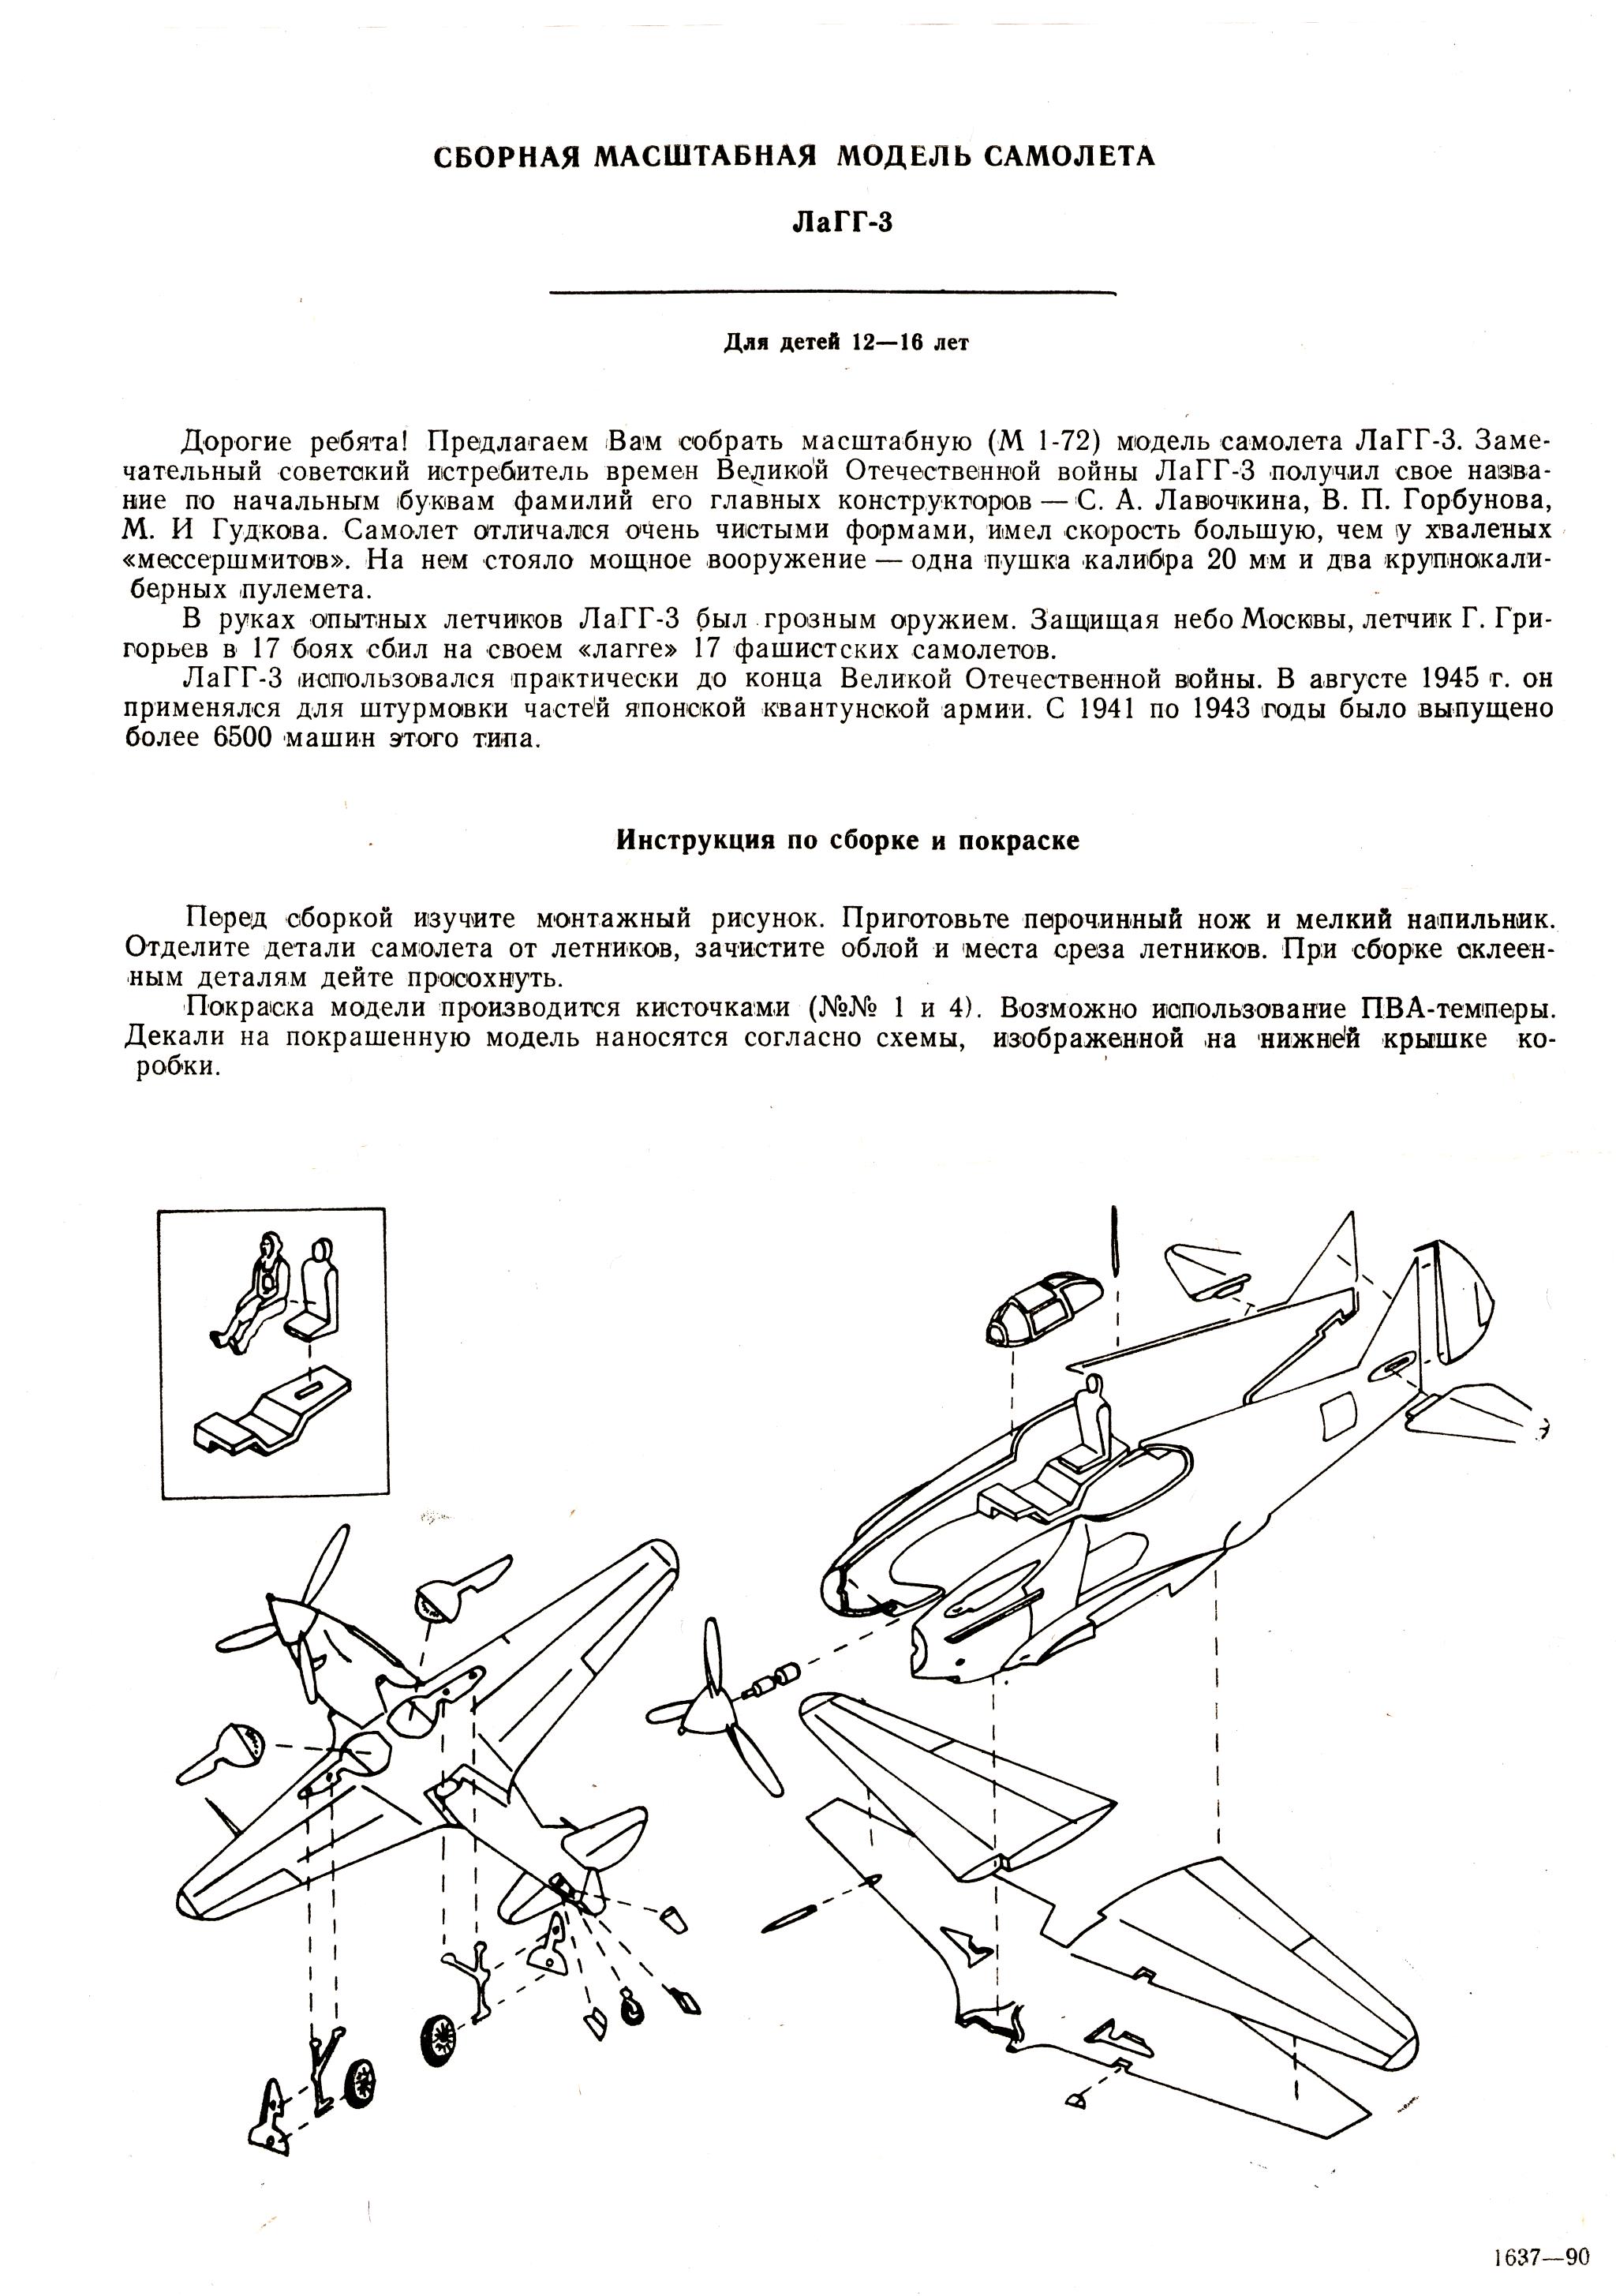 ALFA Lavochkin LAGG-3, late 80-s, assembly instructions